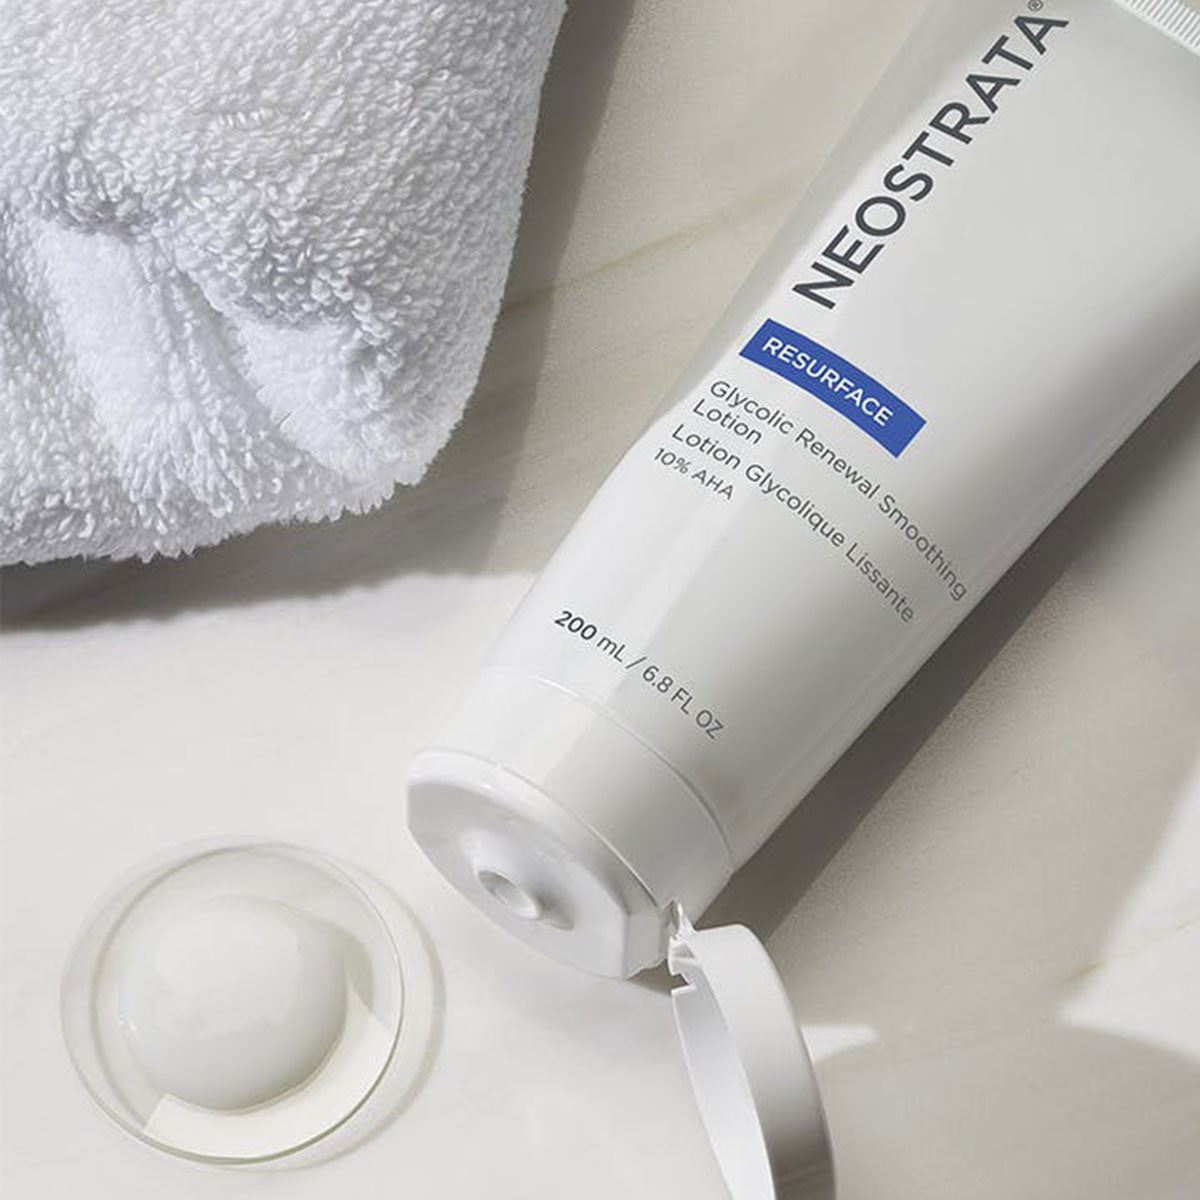 Neostrata glycolic renewal smoothing lotion 200ml - www.Hudonline.no 